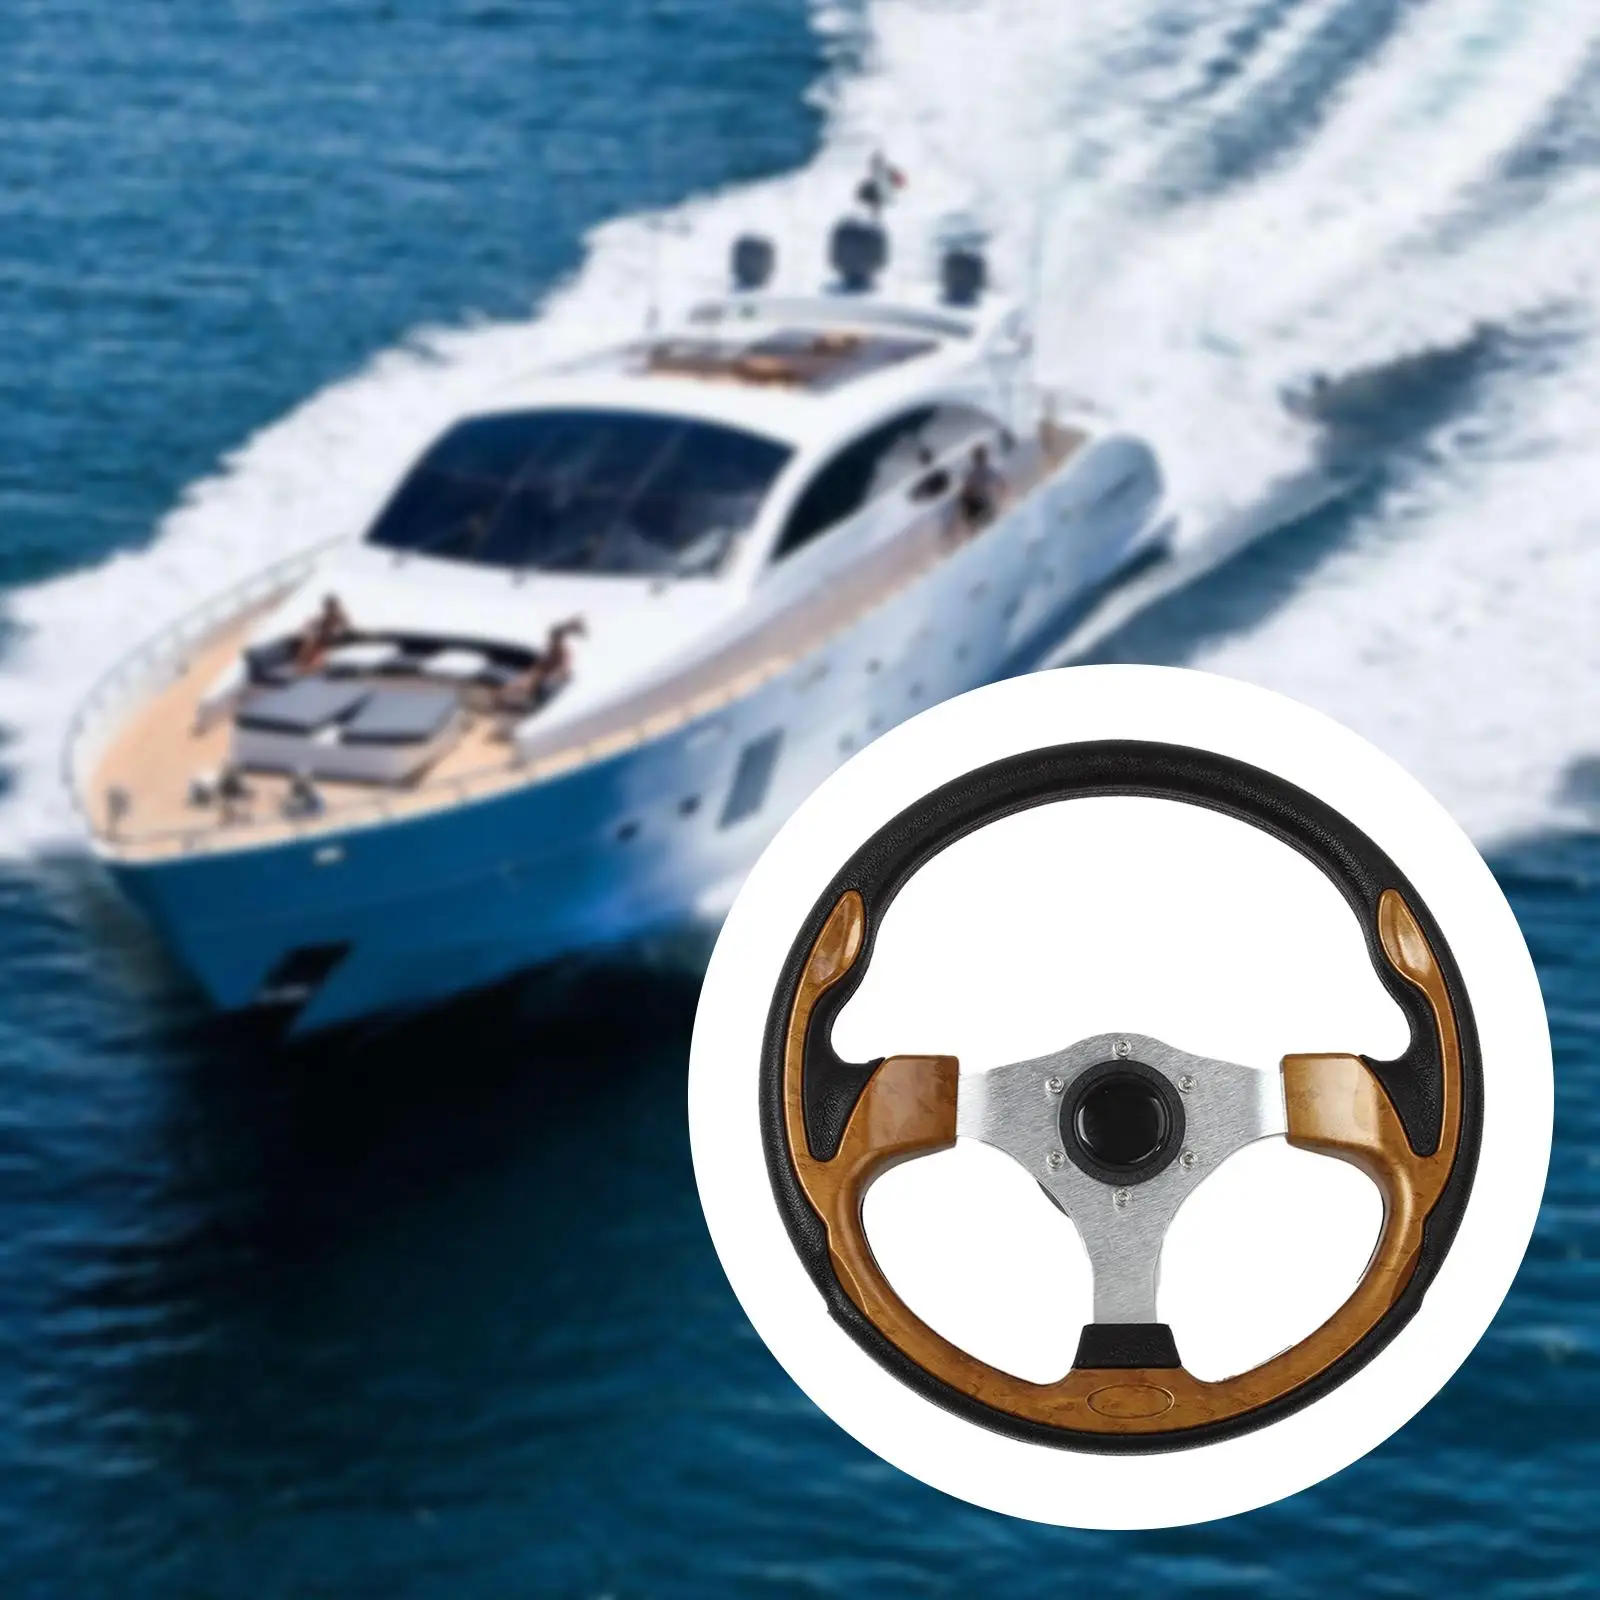 Marine Boat Steering Wheel Marine Steering System for Marine Boats Accs